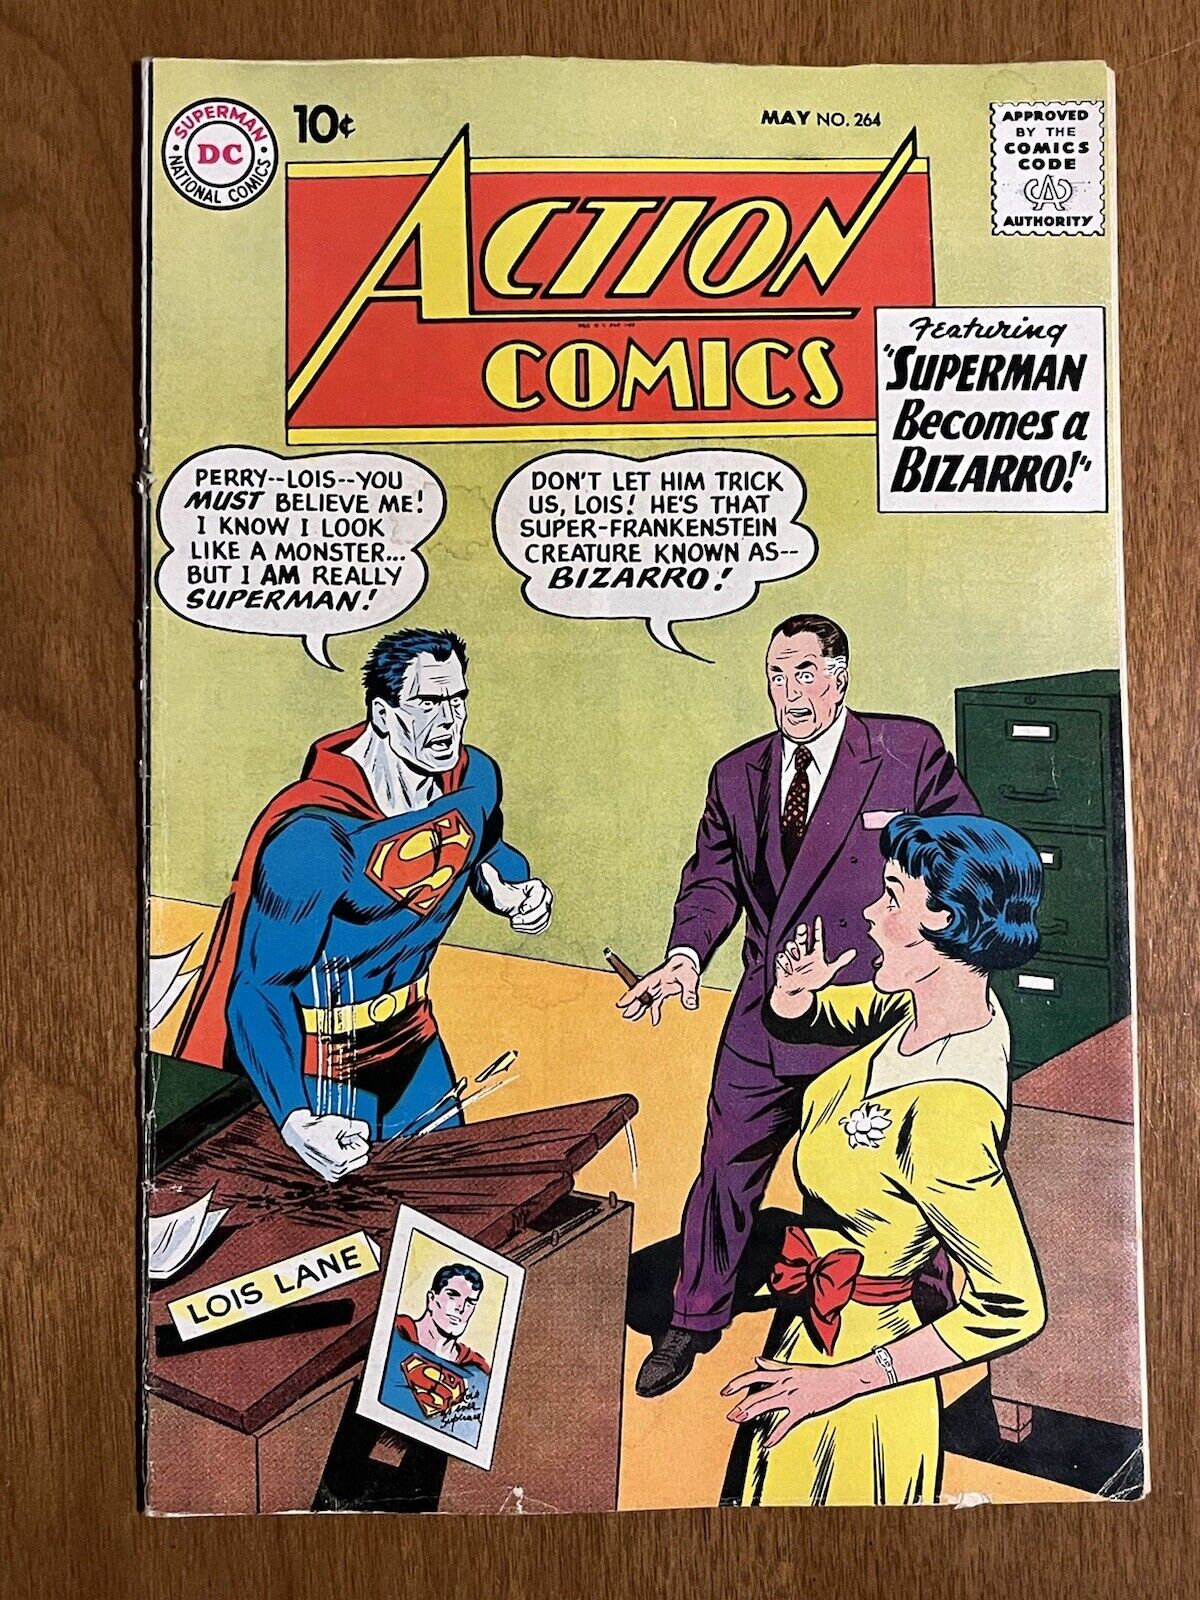 Action Comics #264/Silver Age DC Comic Book/Bizarro Cover/VG+